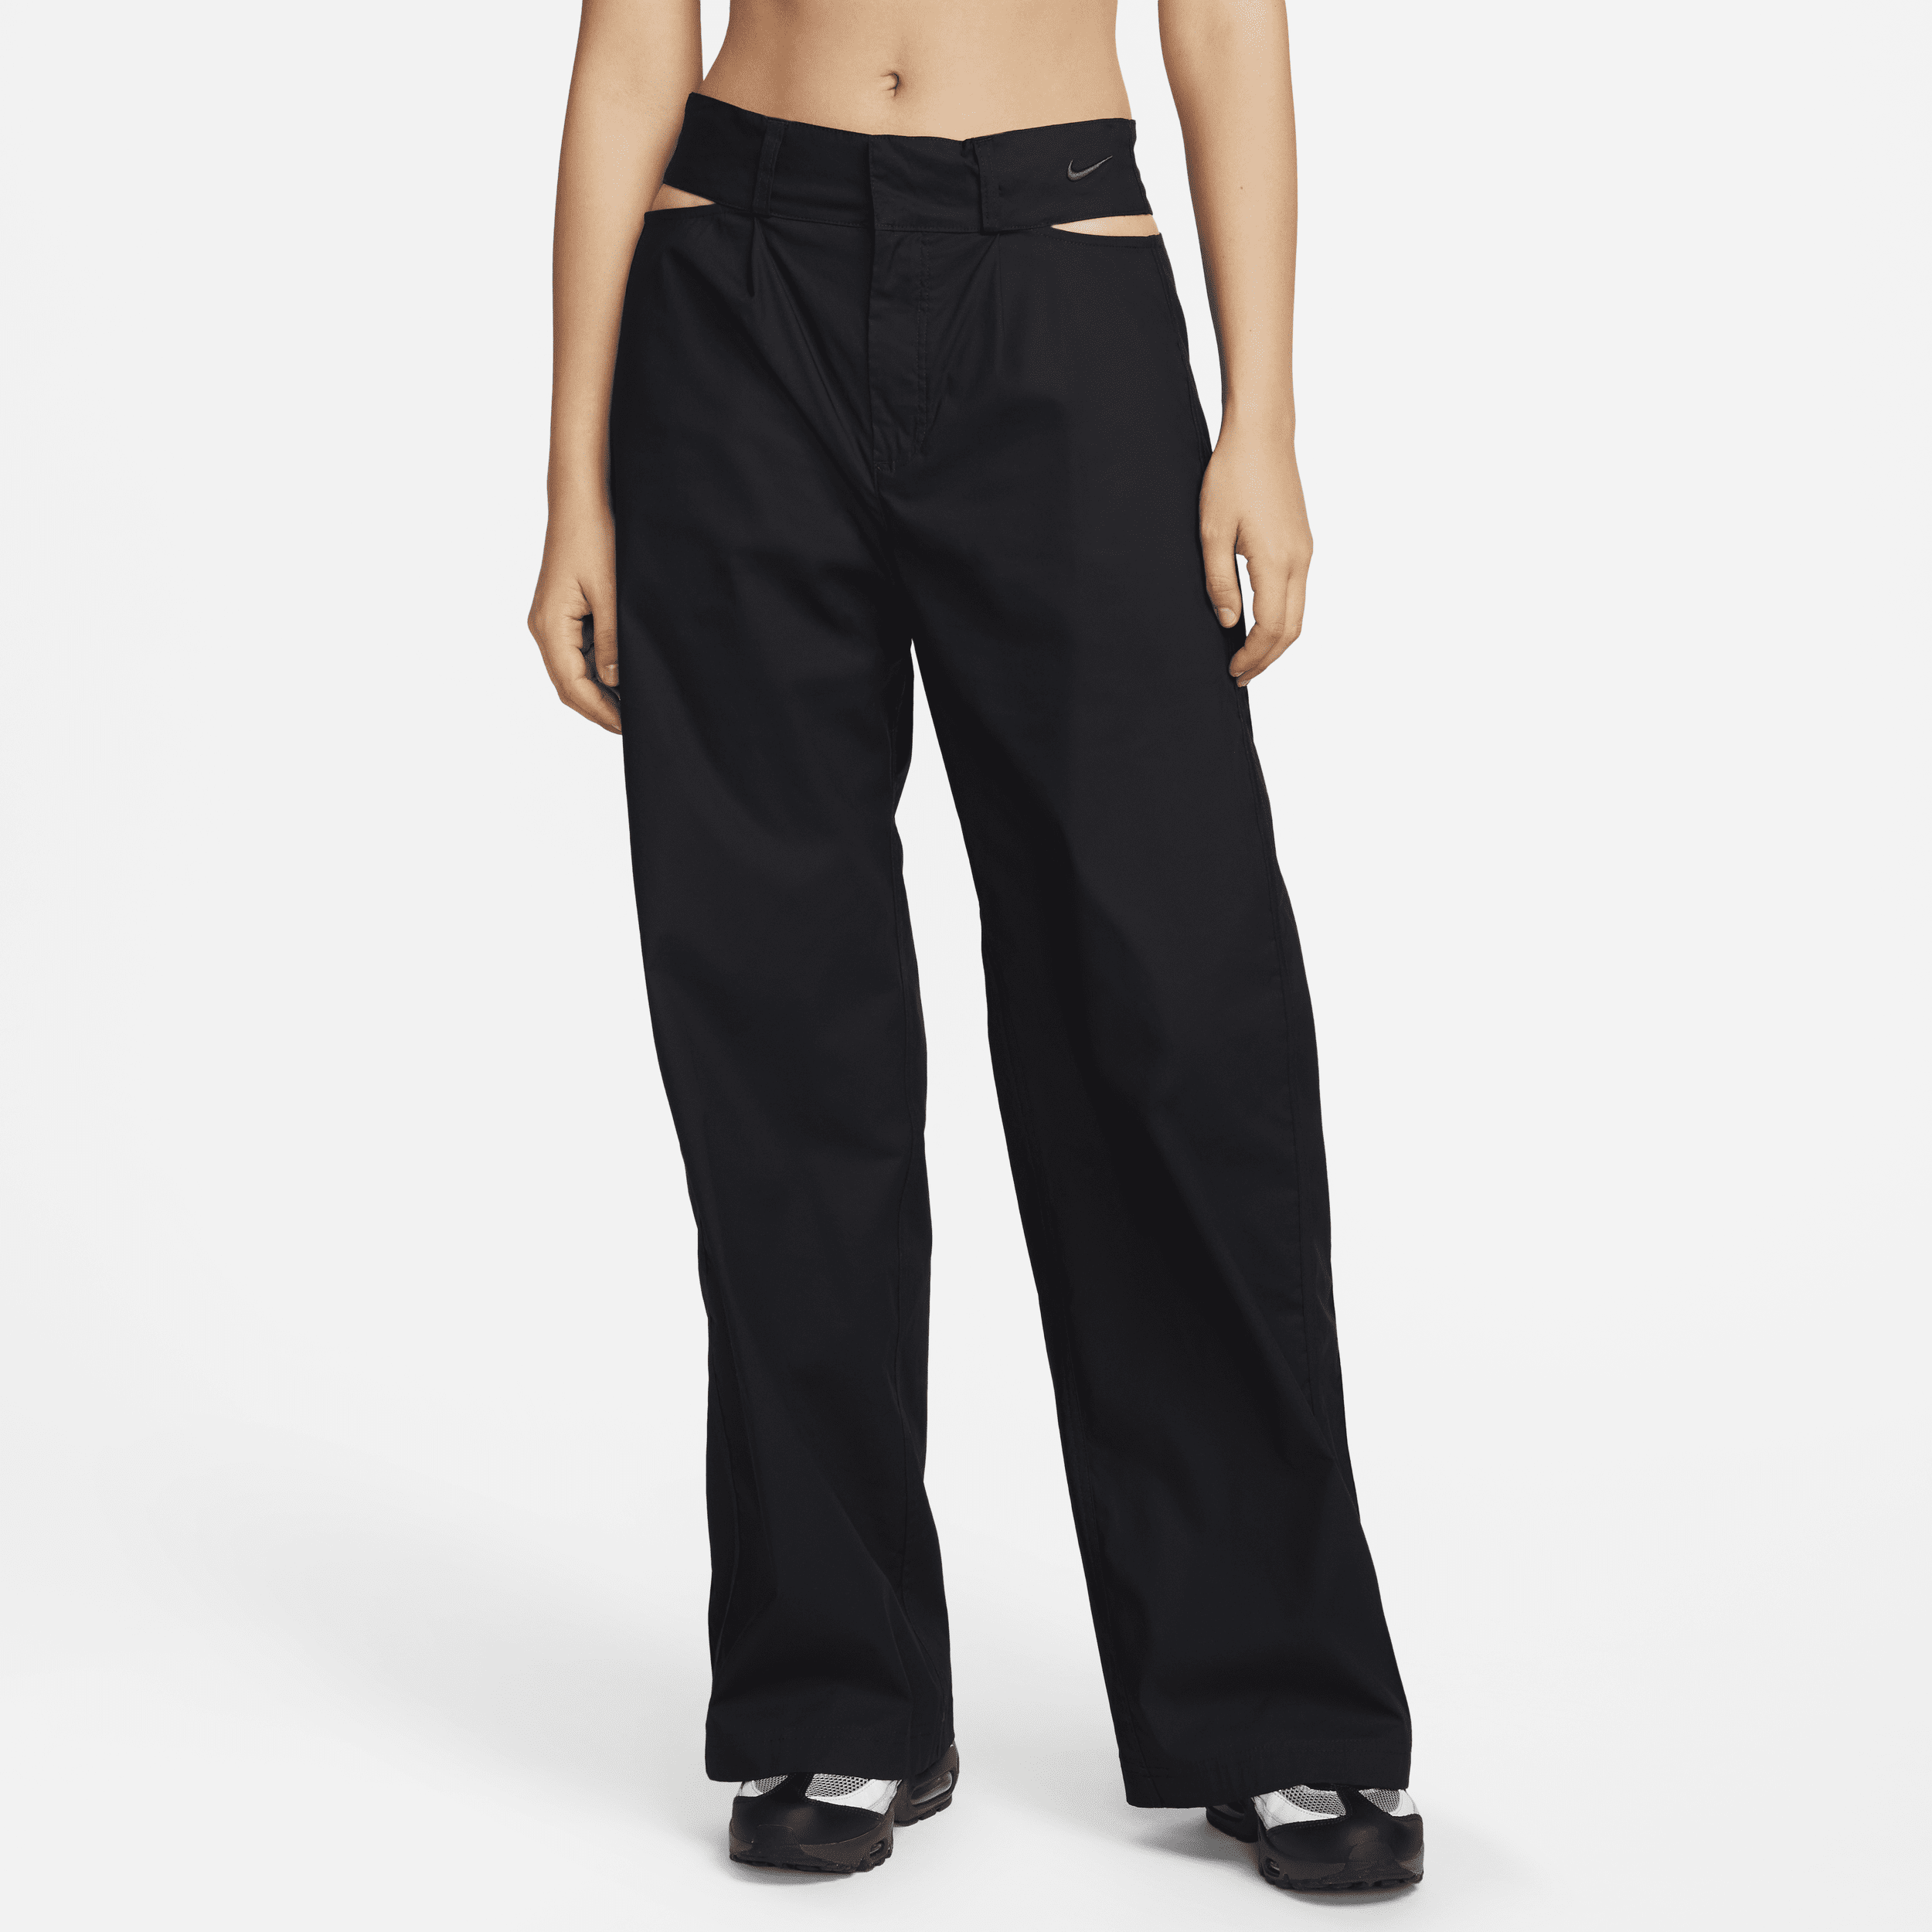 Pantaloni Nike Sportswear – Donna - Nero